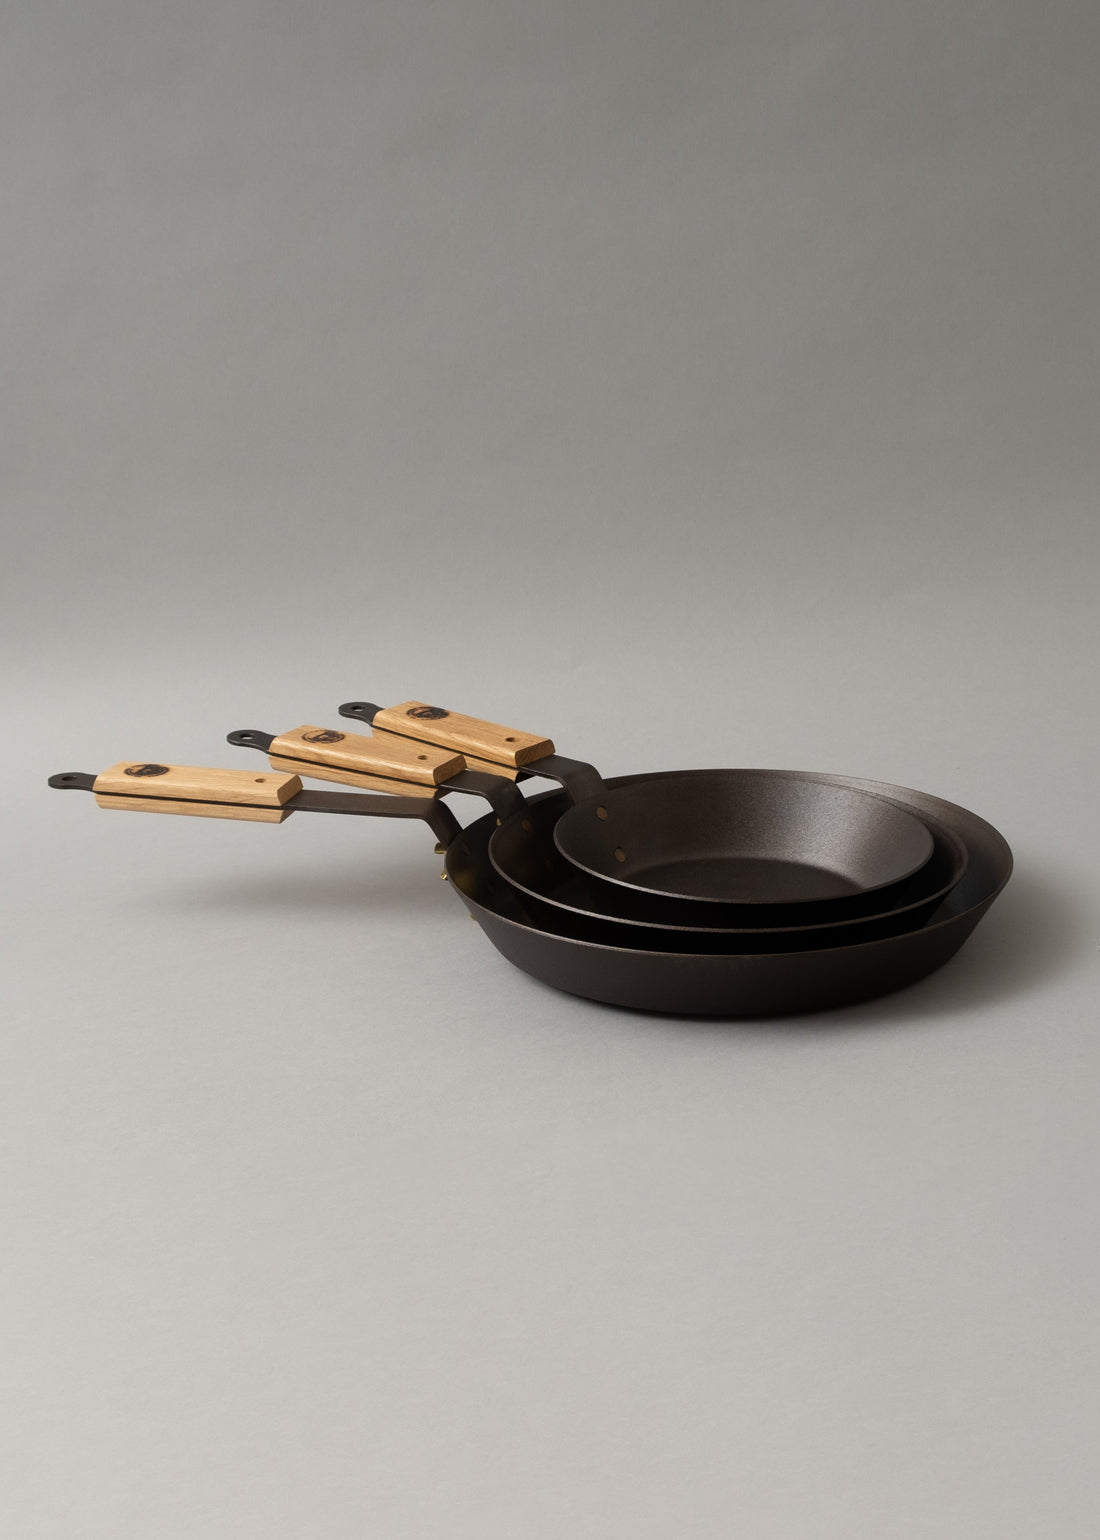 POELE NOMADE - POIGNÉE AMOVIBLE - GLAMPING PAN - ⌀ 30 cm - NETHERTON FOUNDRY